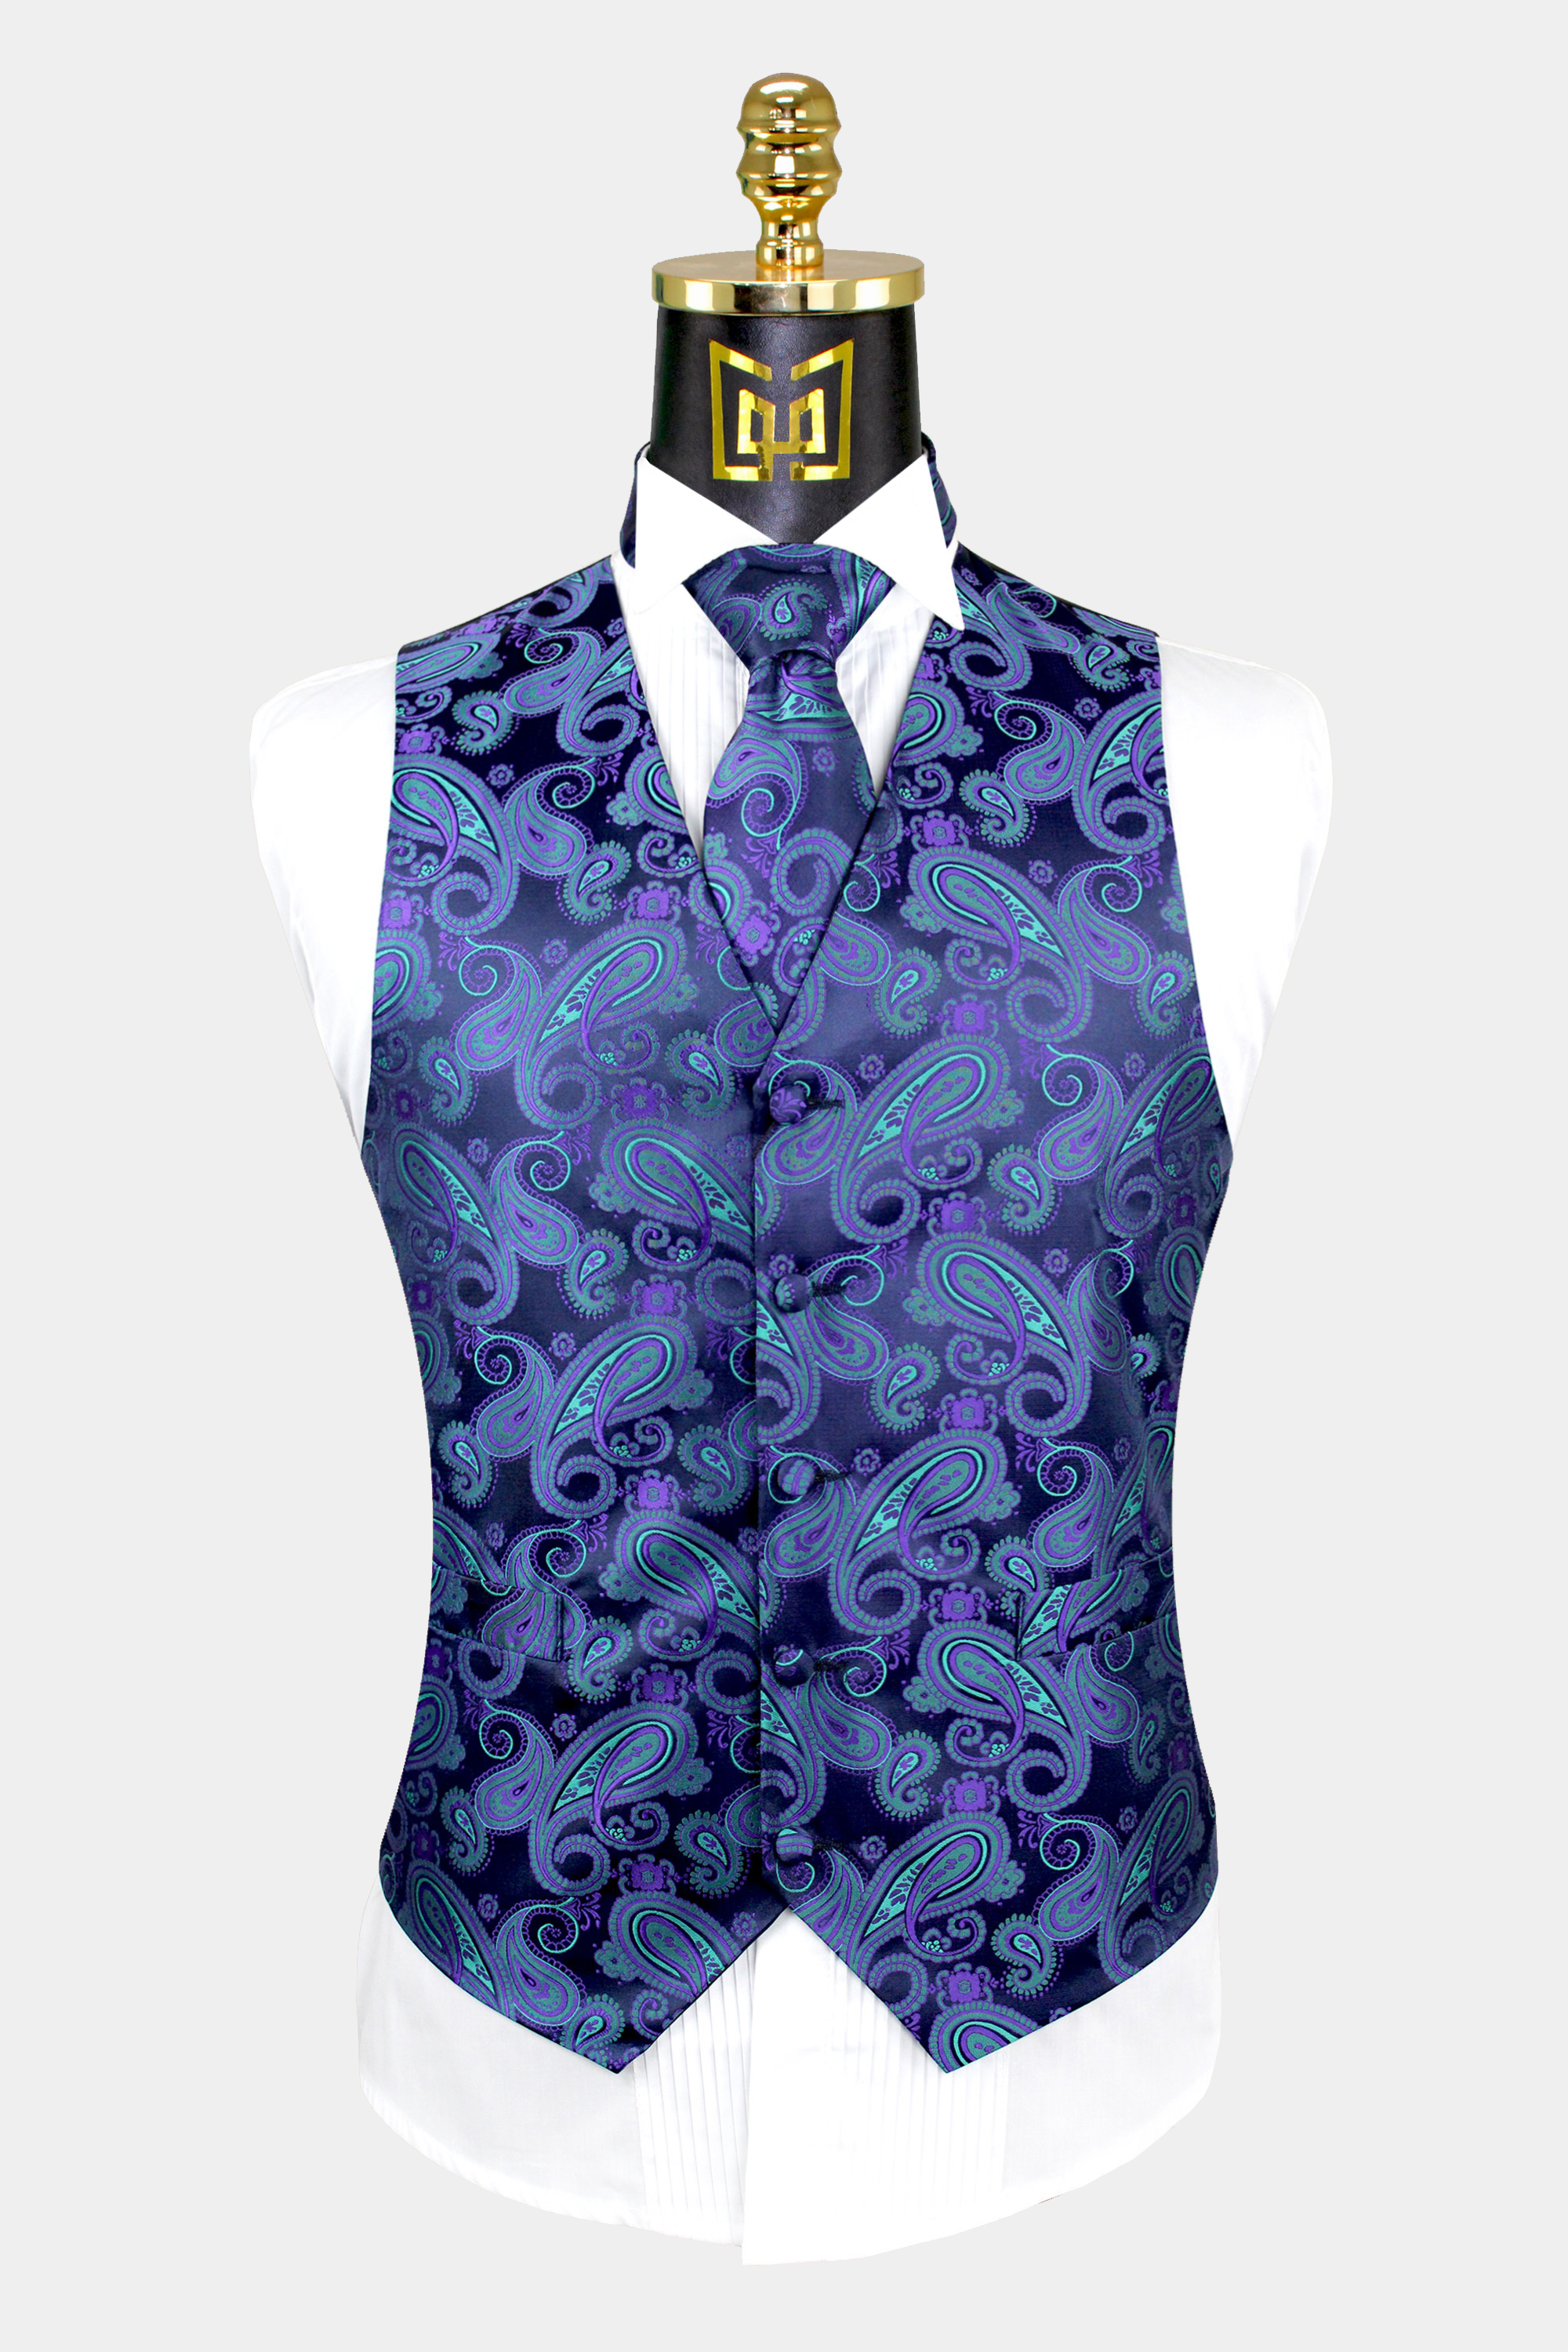 Purple-and-Turquoise-Paisley-Vest-Set-Groom-Tuxedo-Wedding-Waistcoat-from-Gentlemansguru.com